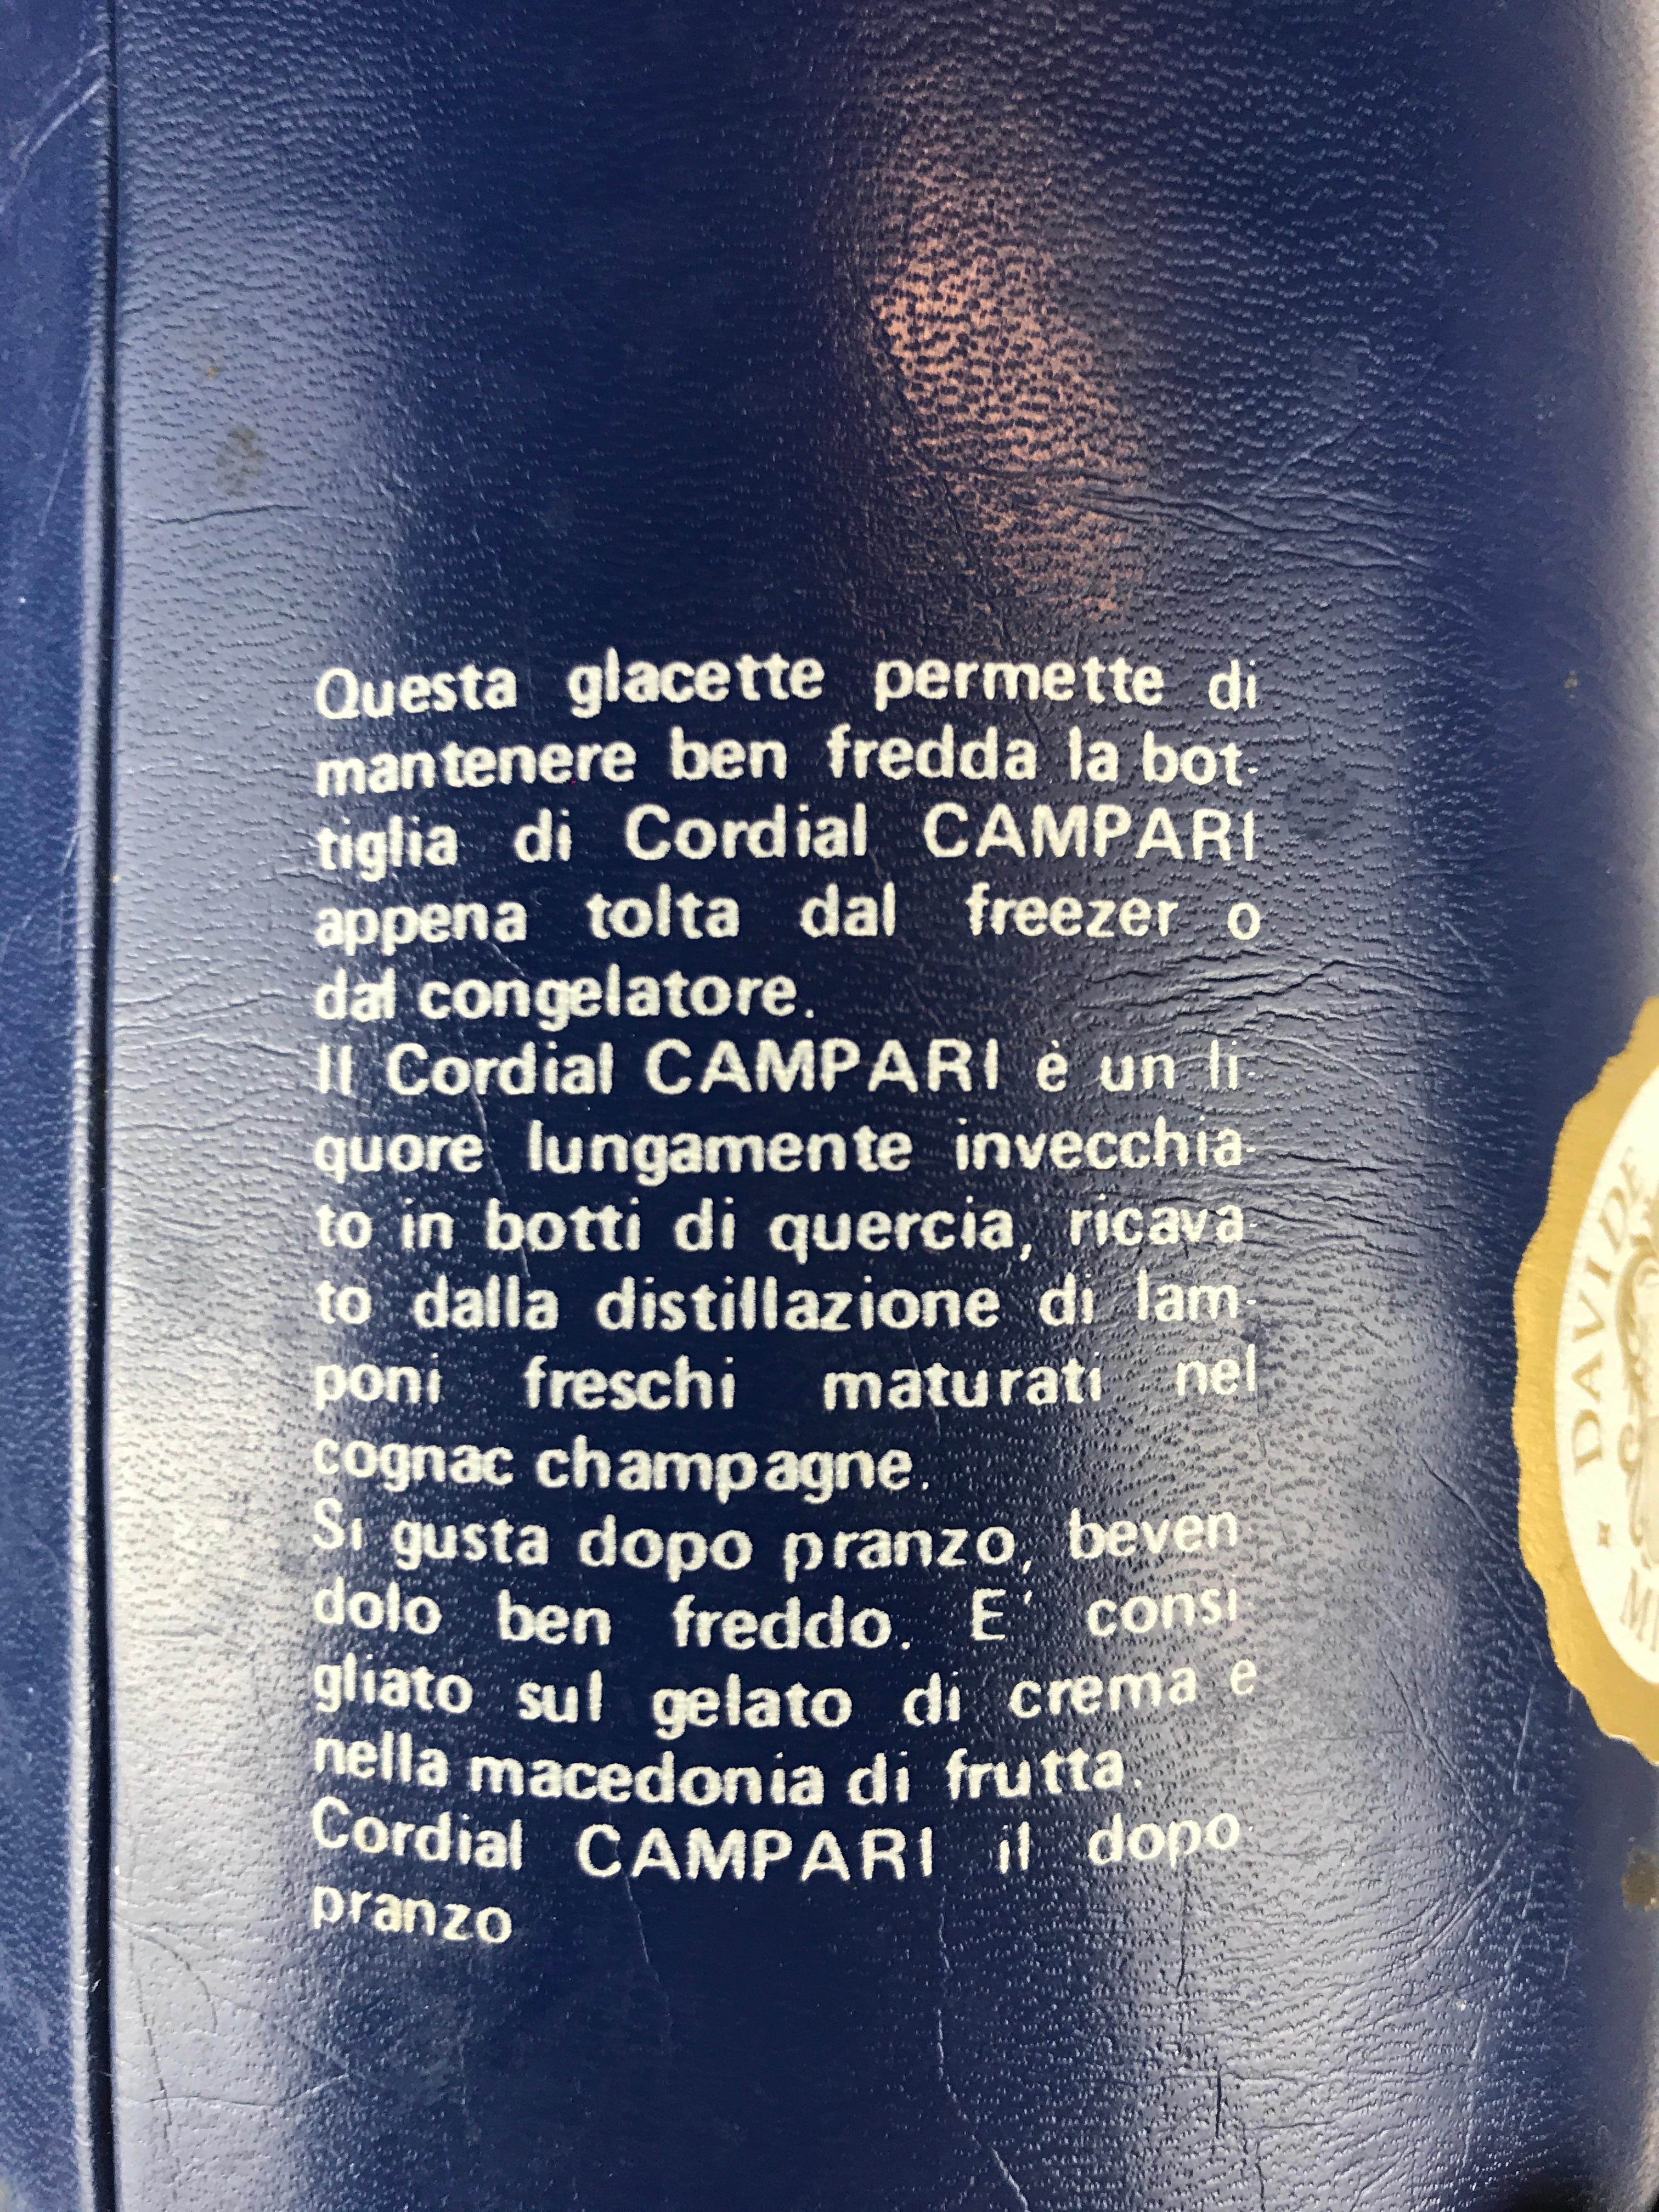 1970s Vintage Italian Advertising Cordial Campari Glacette For Sale 2